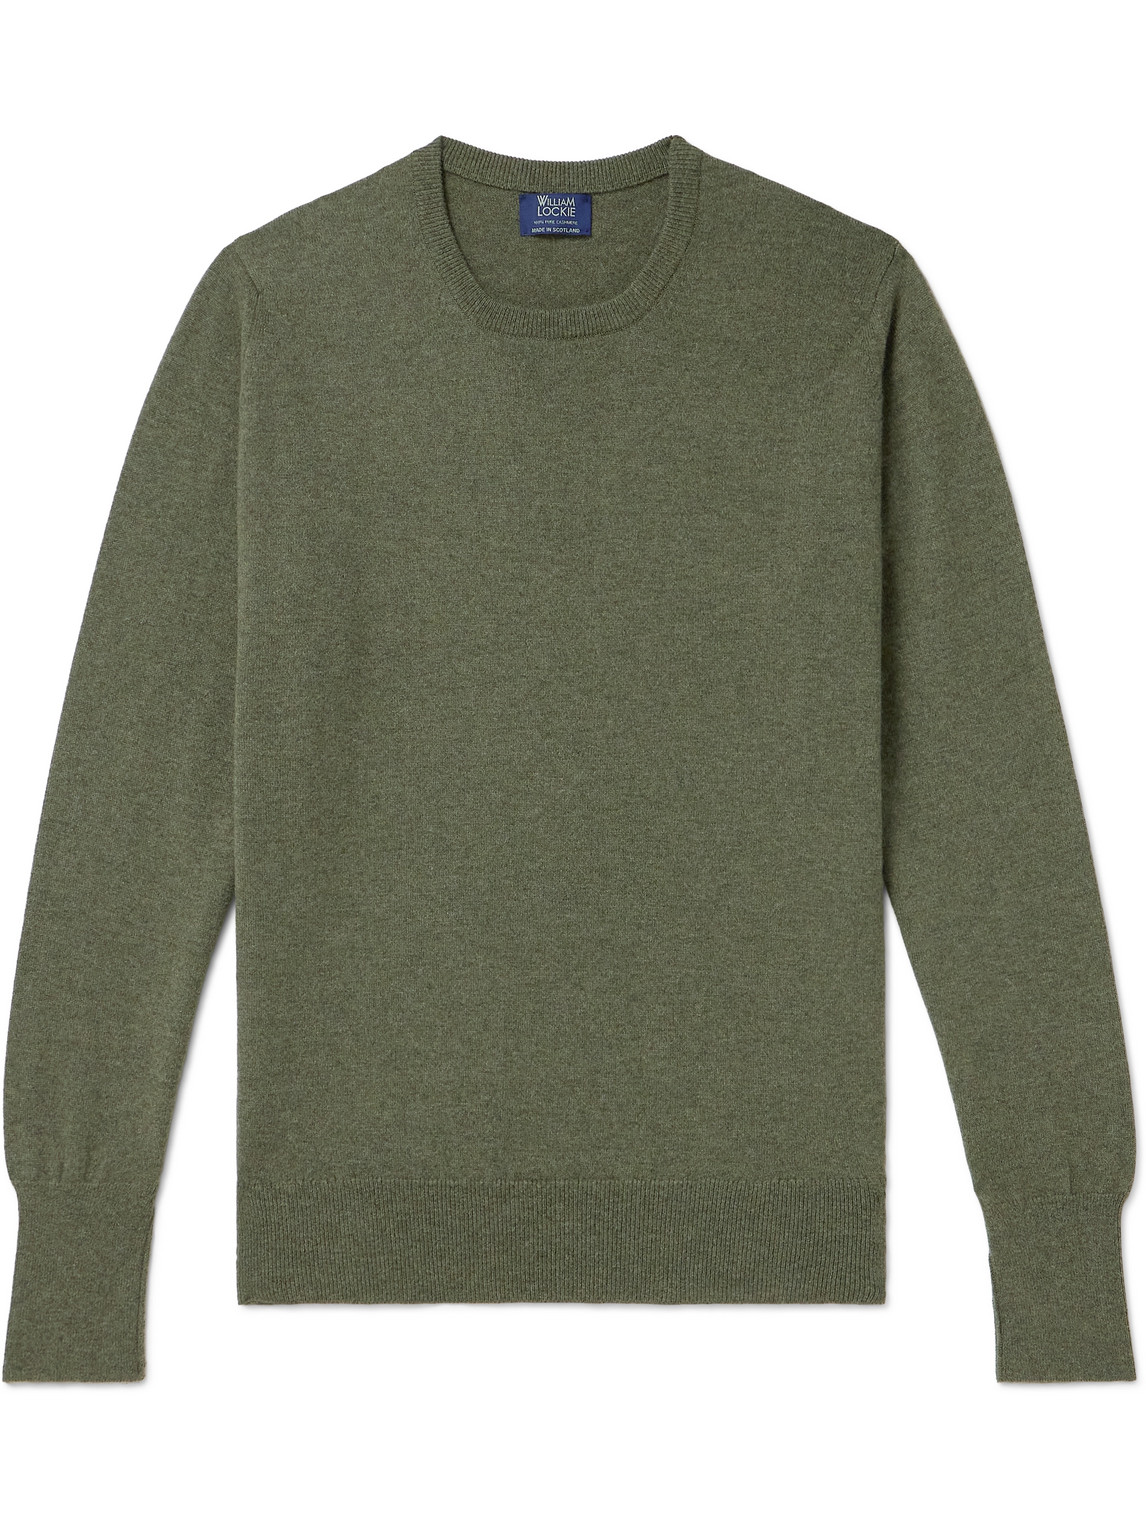 William Lockie Oxton Cashmere Sweater In Green